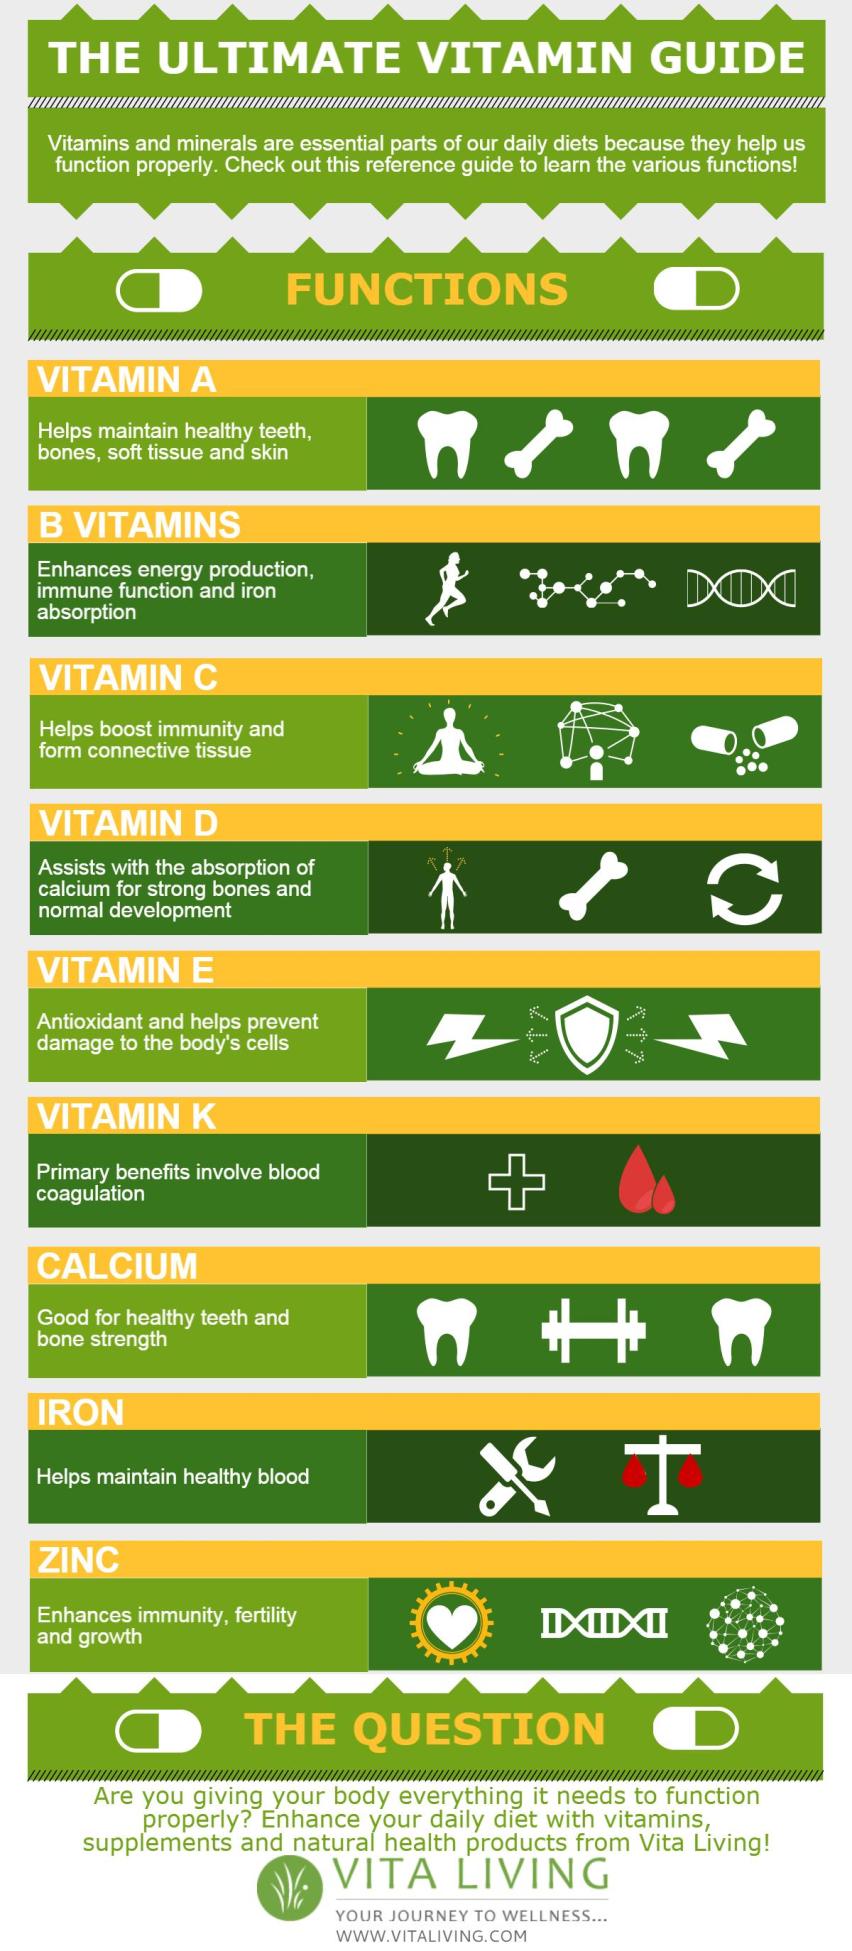 The Ultimate Vitamin Guide